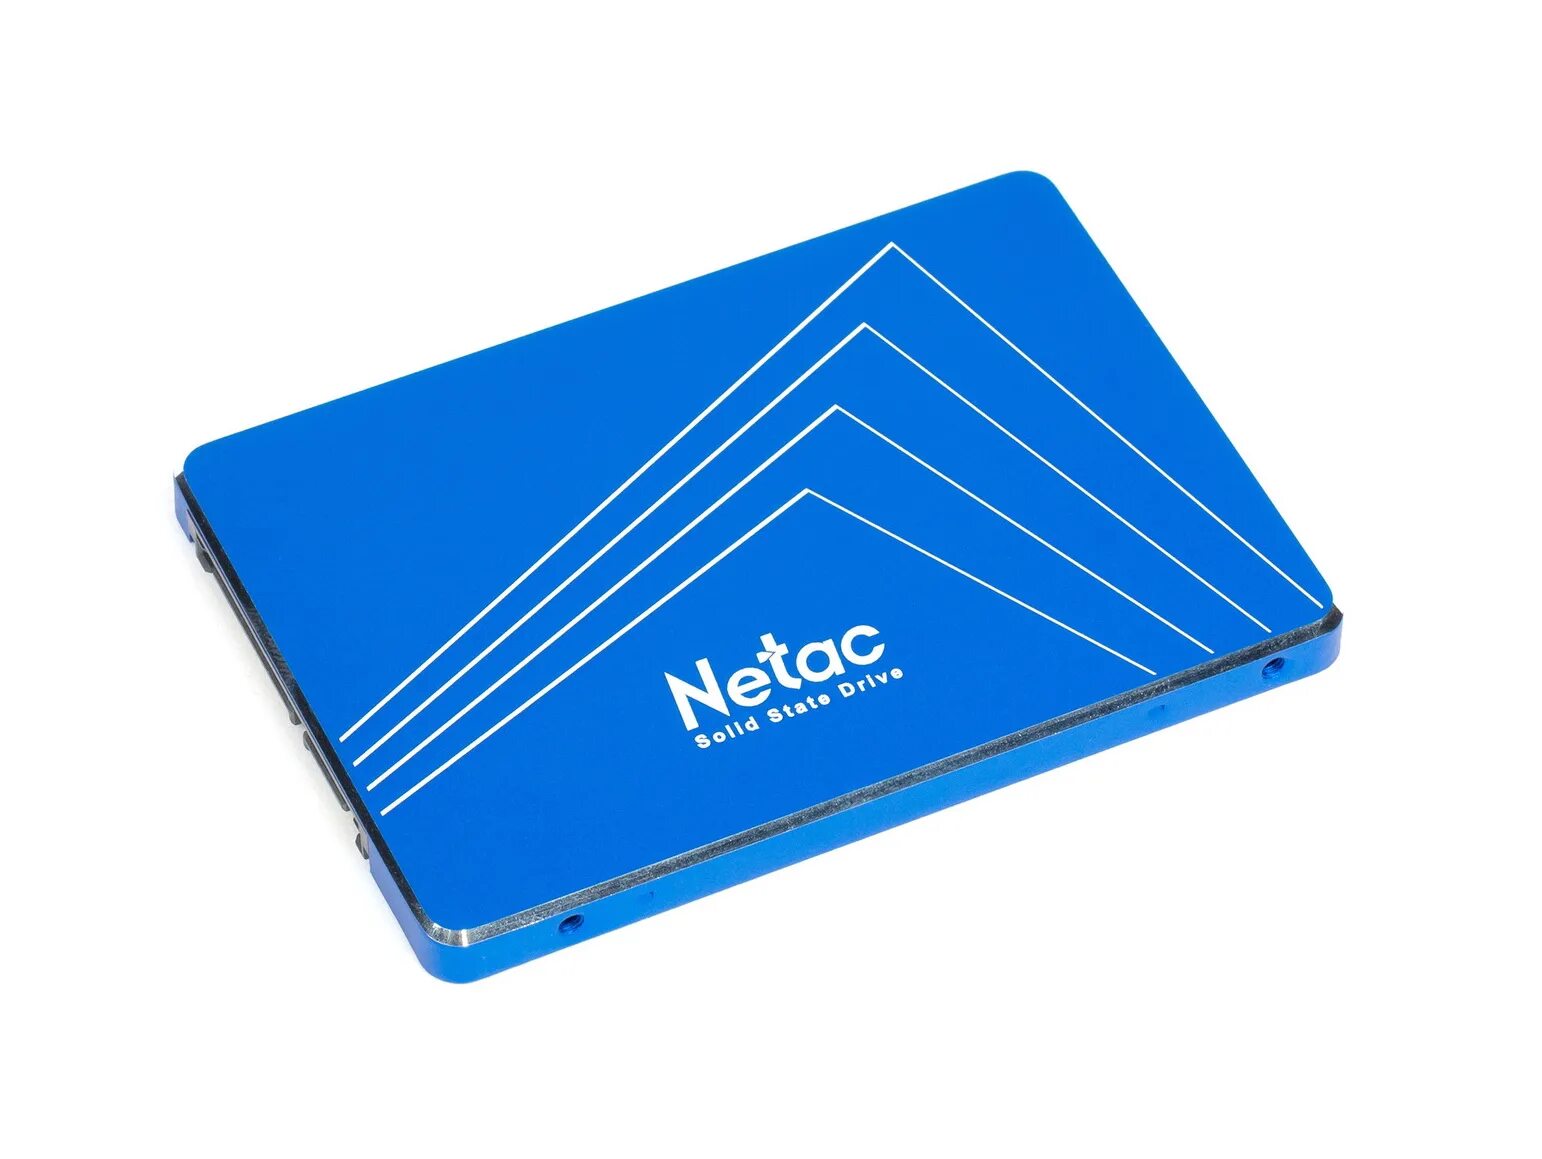 S 535. SSD Netac n535s 240gb. SSD Netac n600s 128gb. SSD Netac n535s 960gb. 120 ГБ 2.5" SATA накопитель Netac n535s [nt01n535s-120g-s3x].